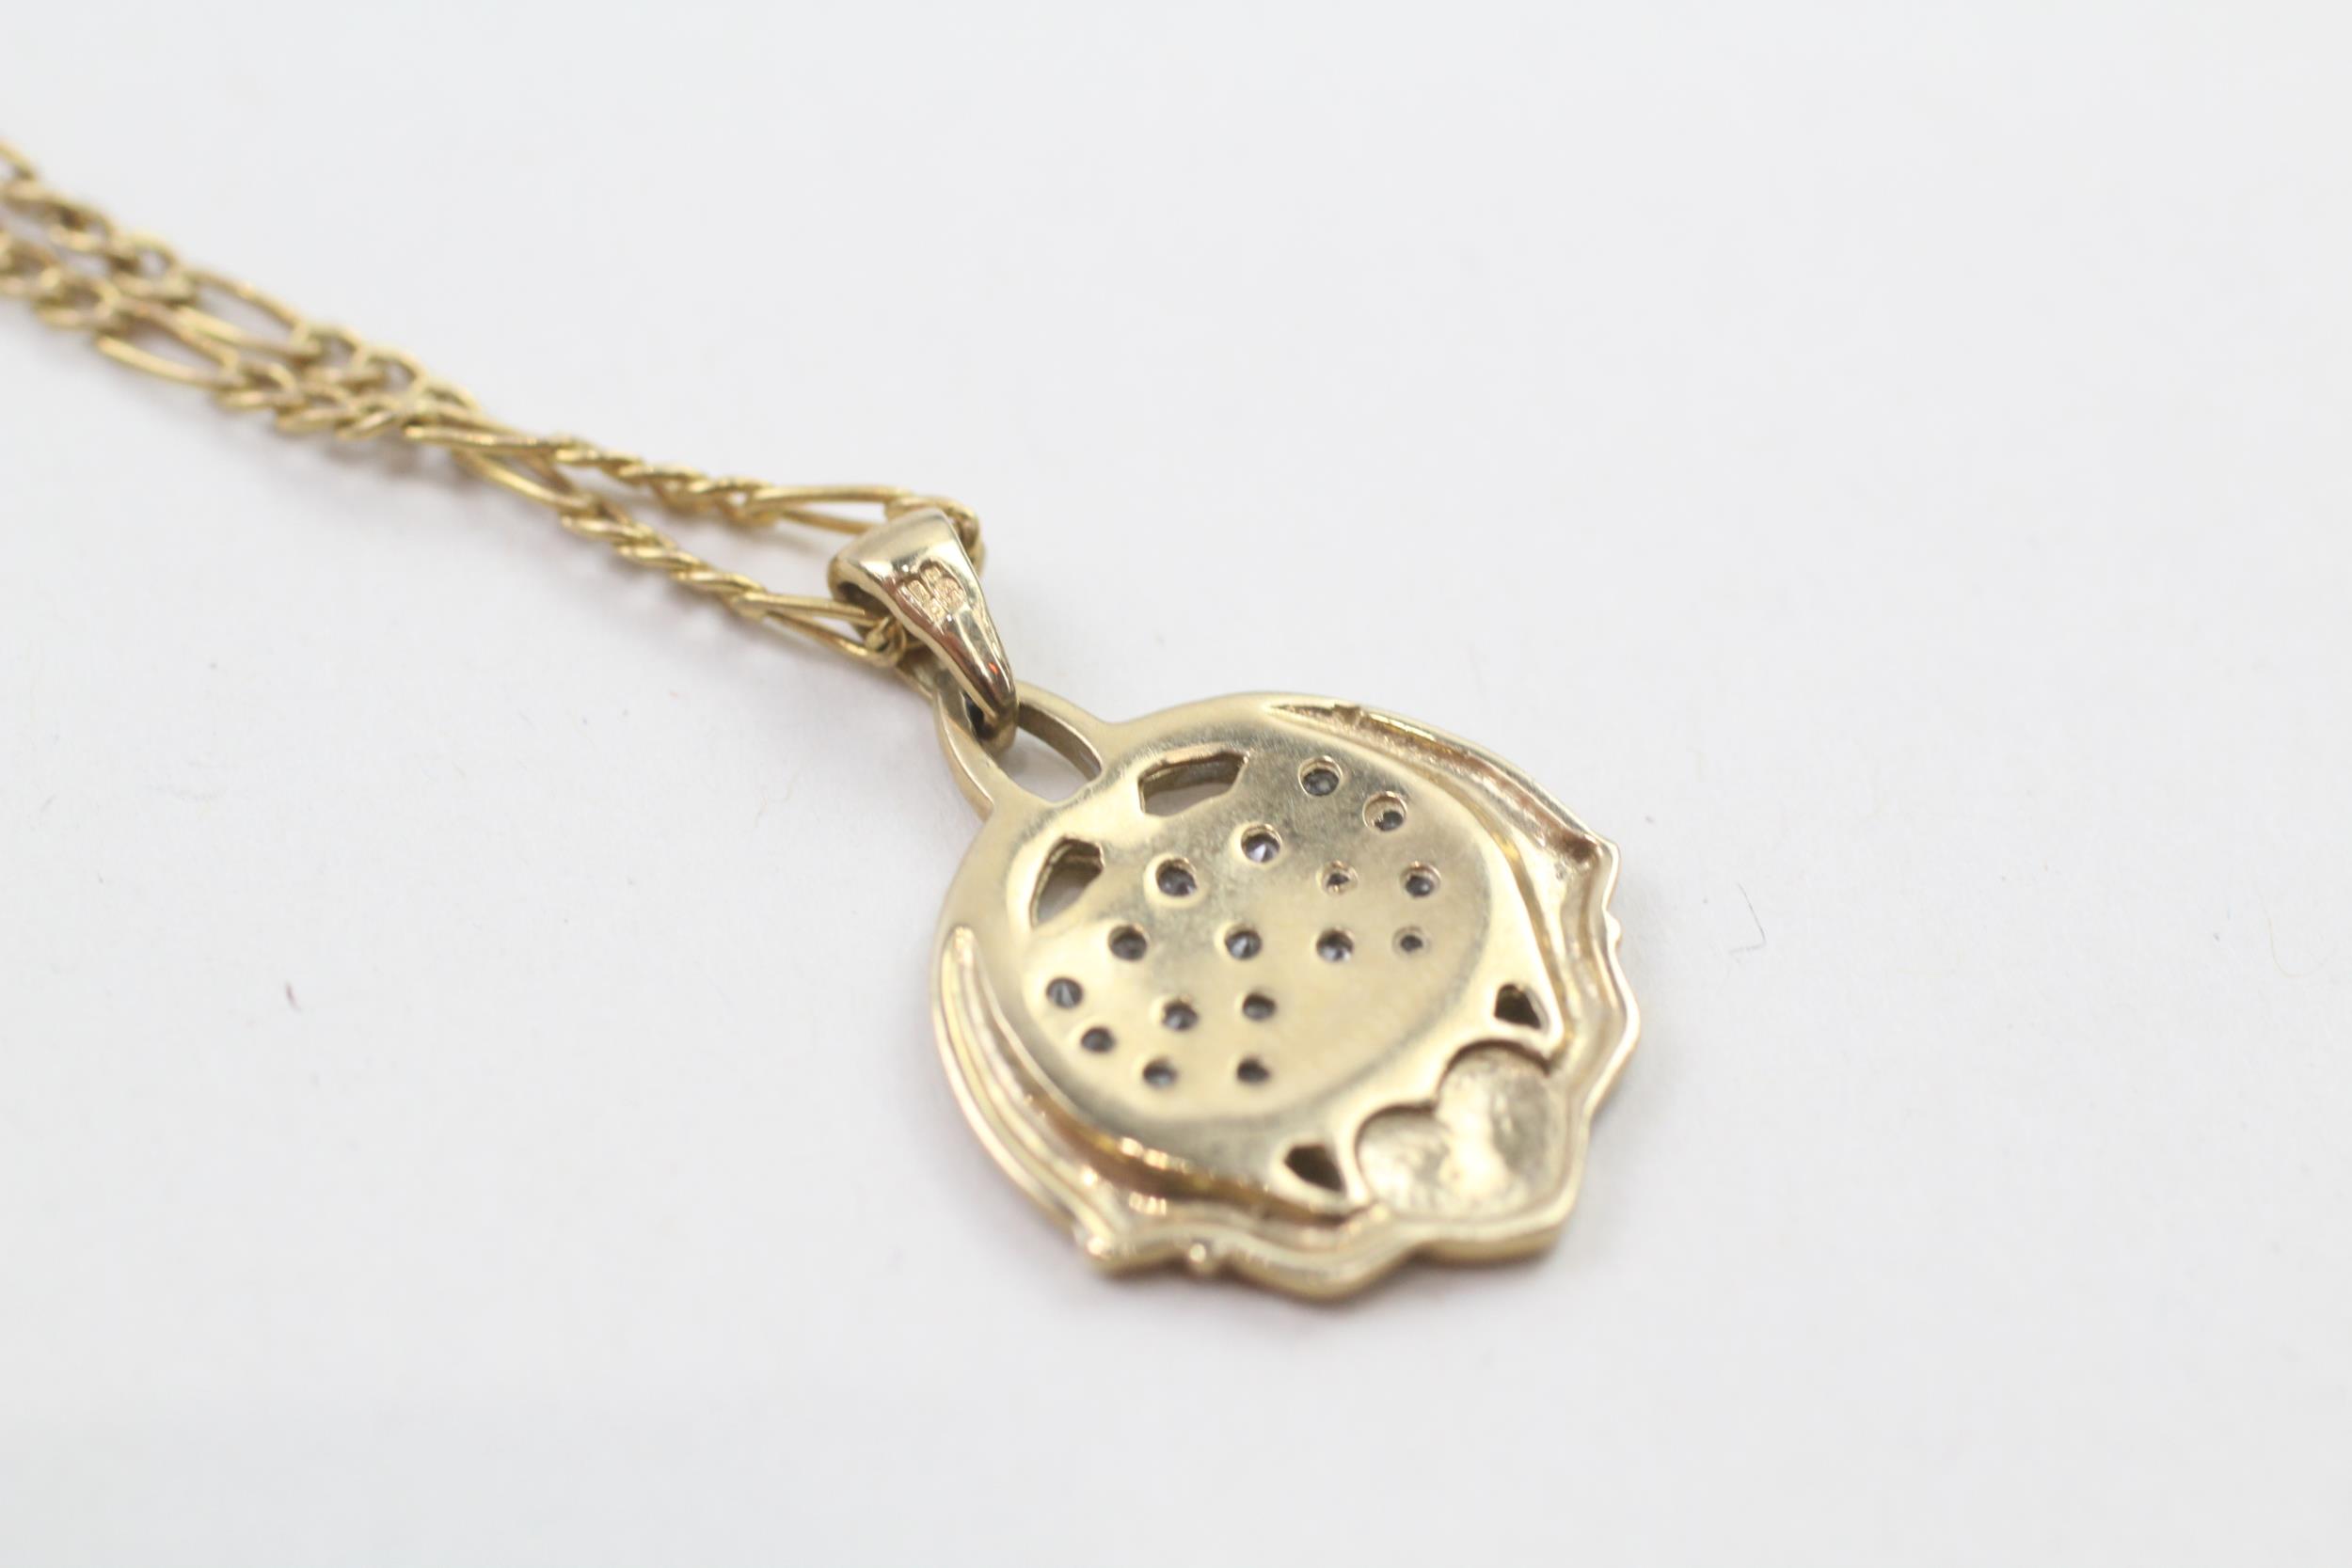 9ct gold diamond irish claddah pendant necklace (3.2g) - Image 4 of 4